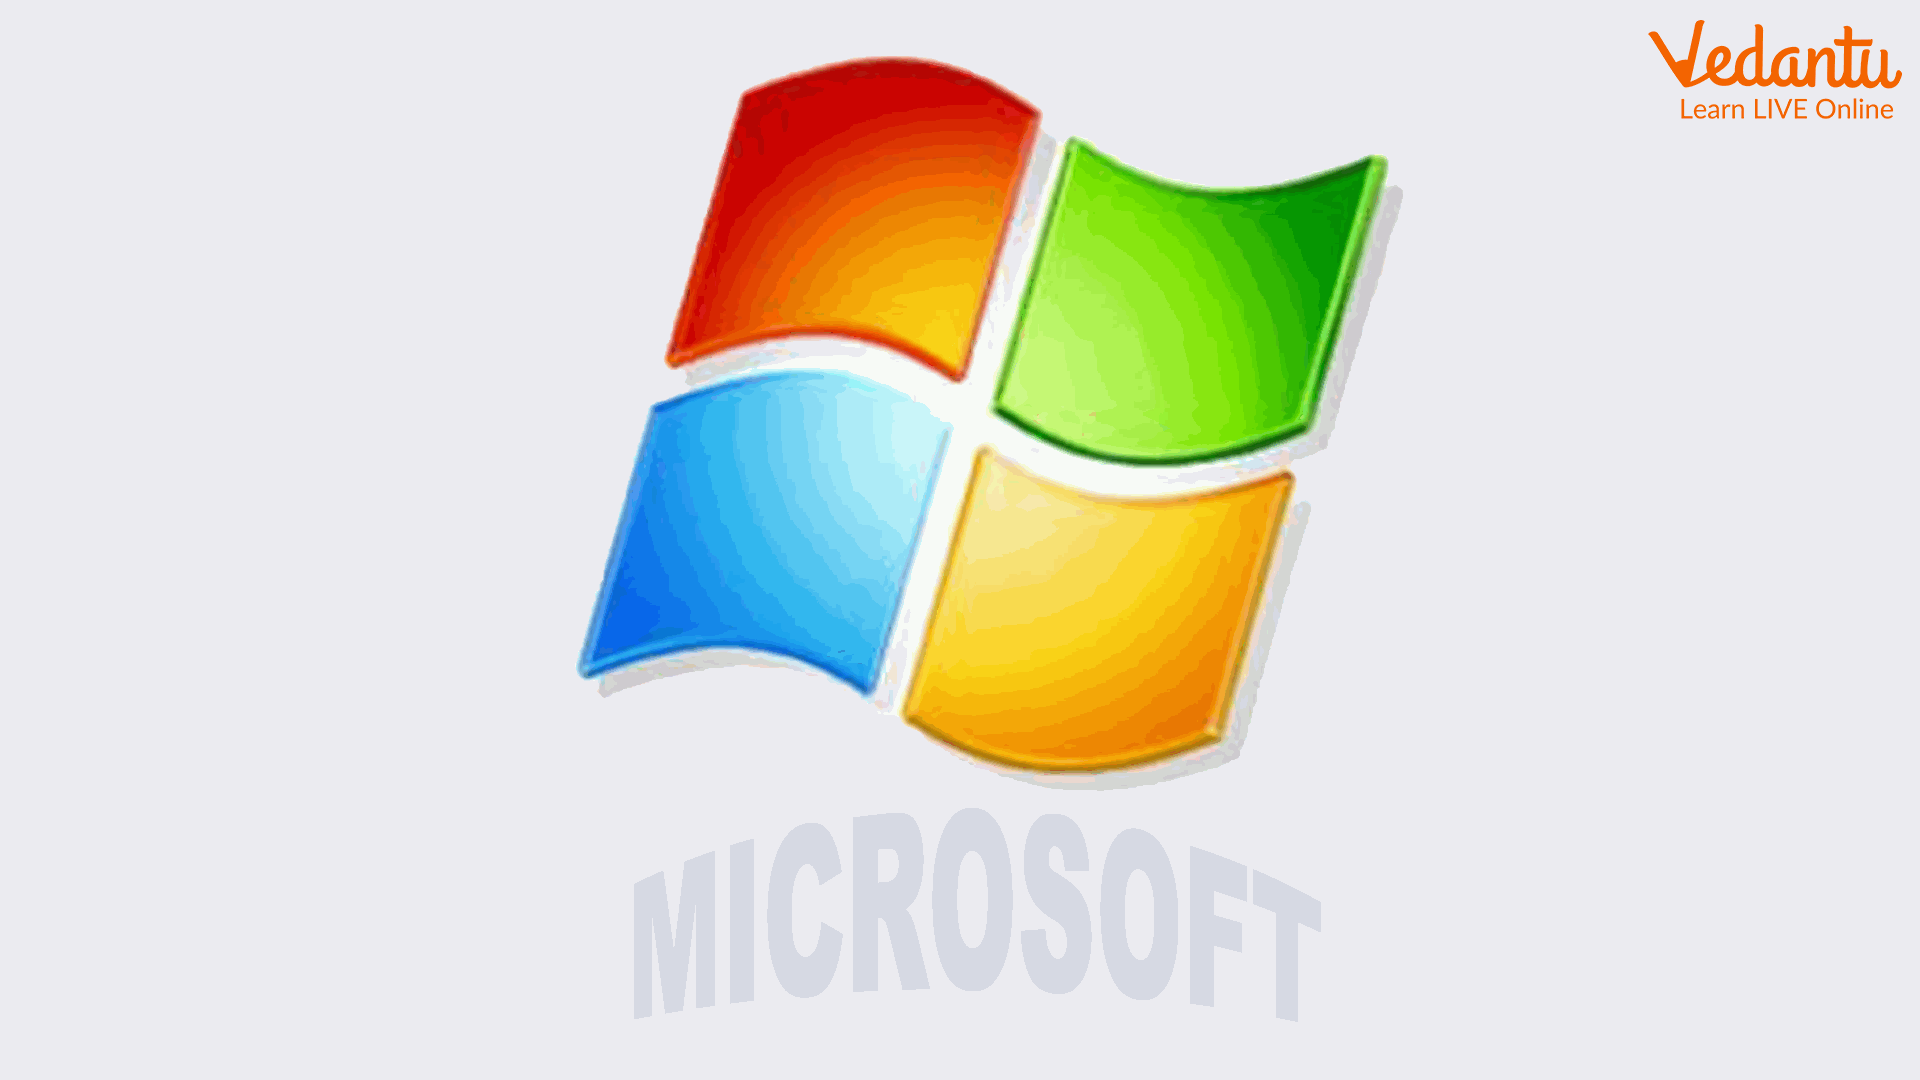 Microsoft Windows OS Logo